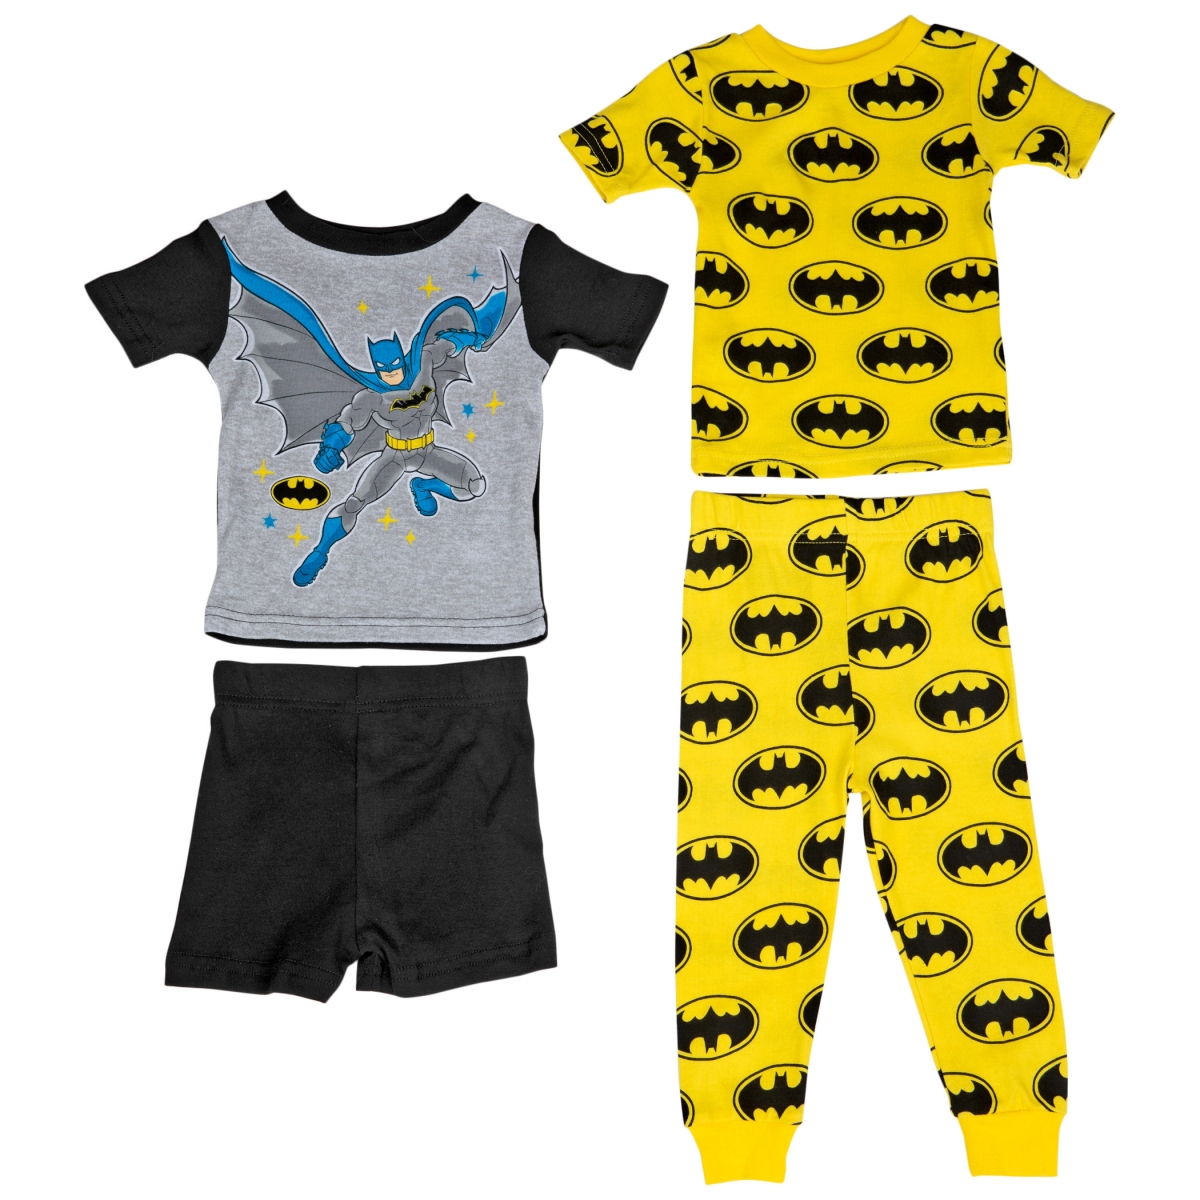 Picture of Batman 838784-toddler3t DC Comics Batman & Bat Symbol All Over Print Pajama Set - Toddler 3T - 4 Piece